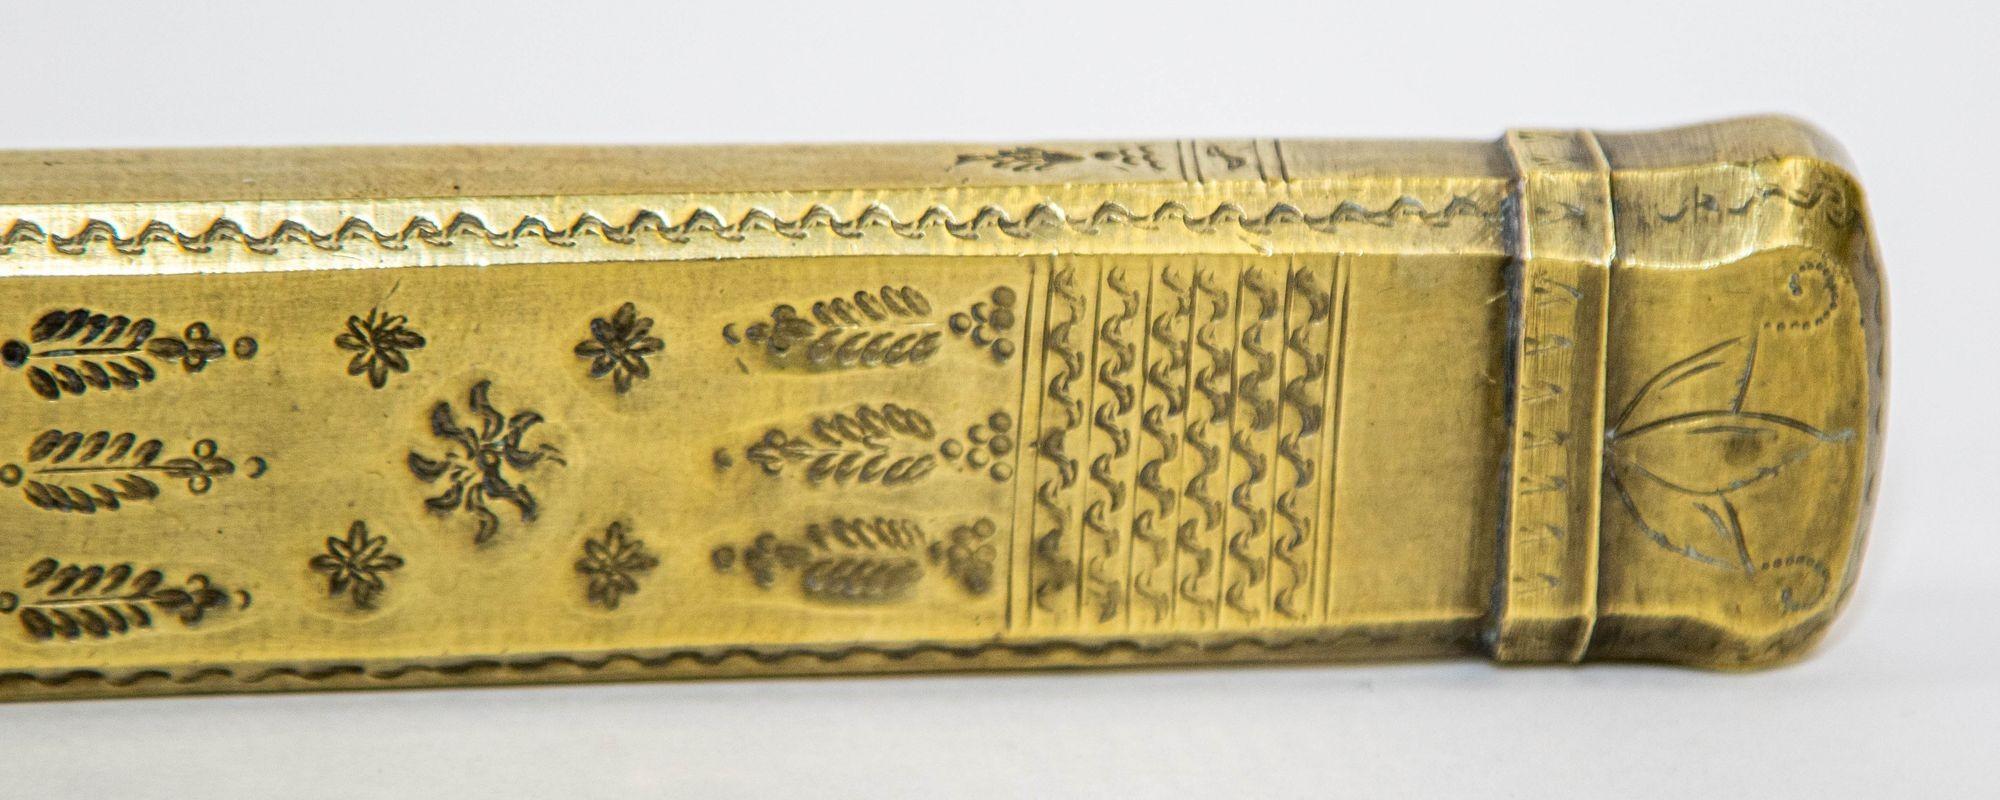 Antique Middle Eastern Islamic Brass Inkwell Qalamdan, circa 1850 For Sale 4